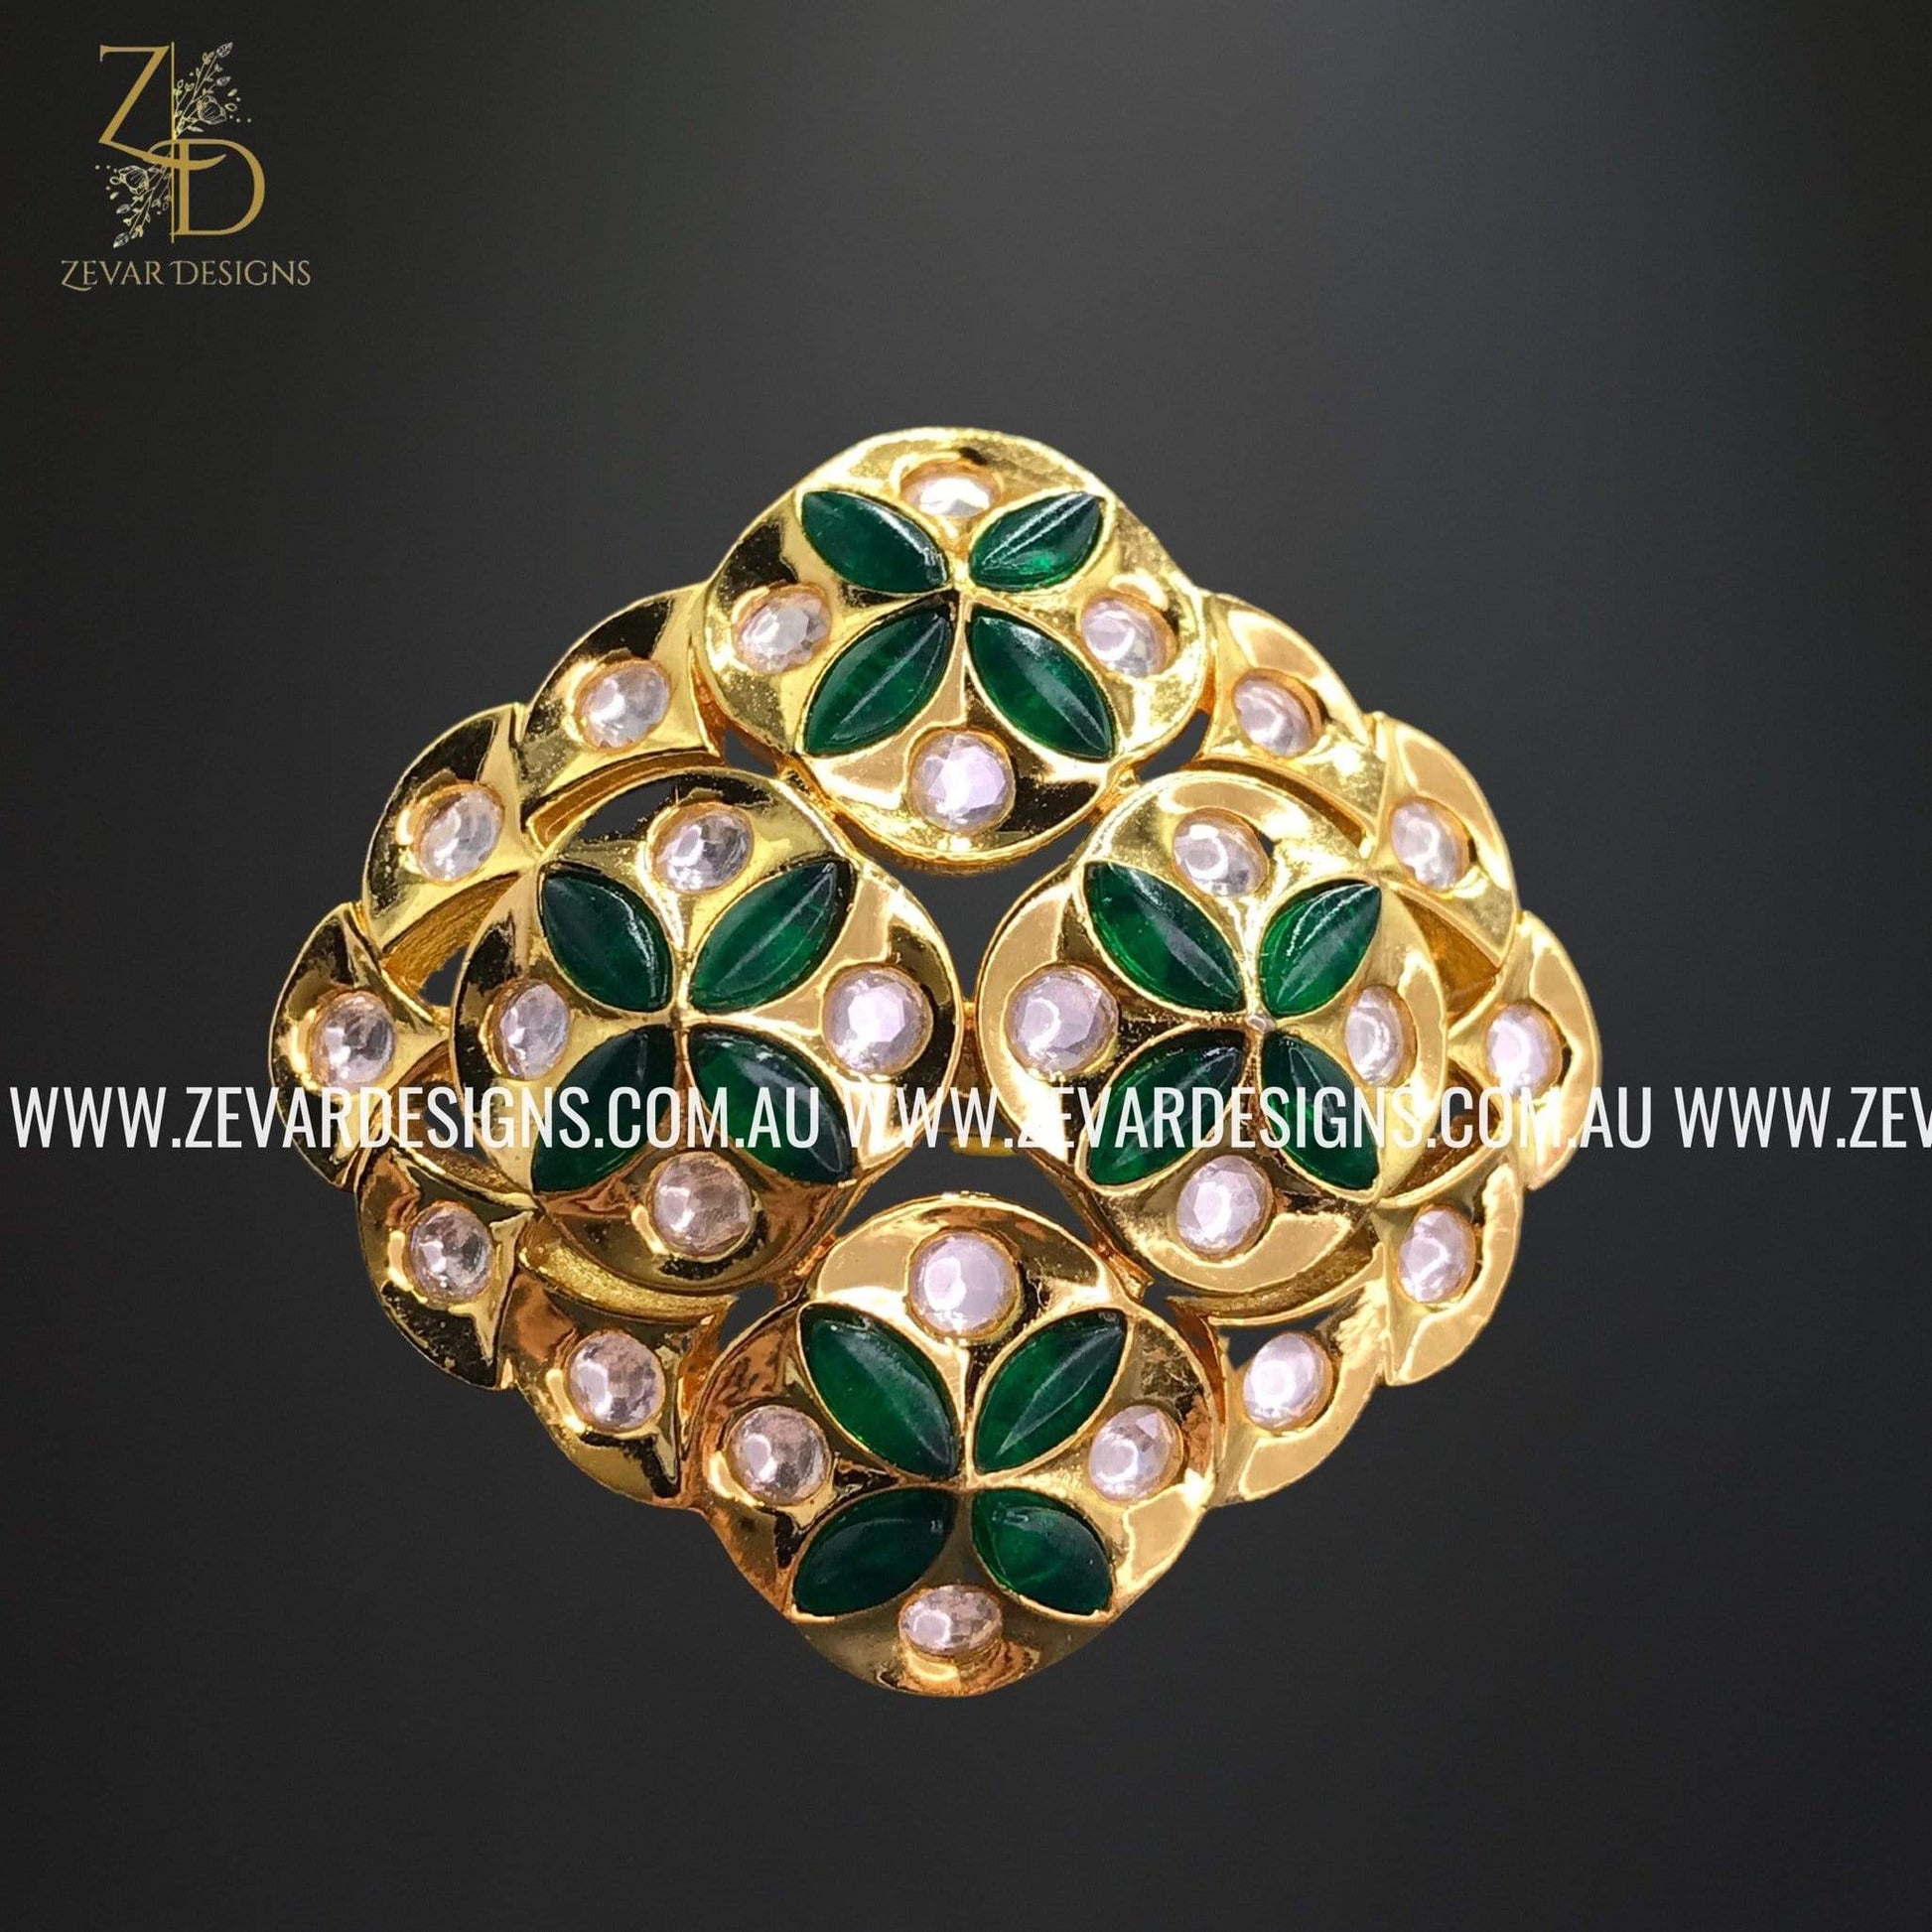 Zevar Designs Kundan Ring Square Kundan Ring in Emerald Green